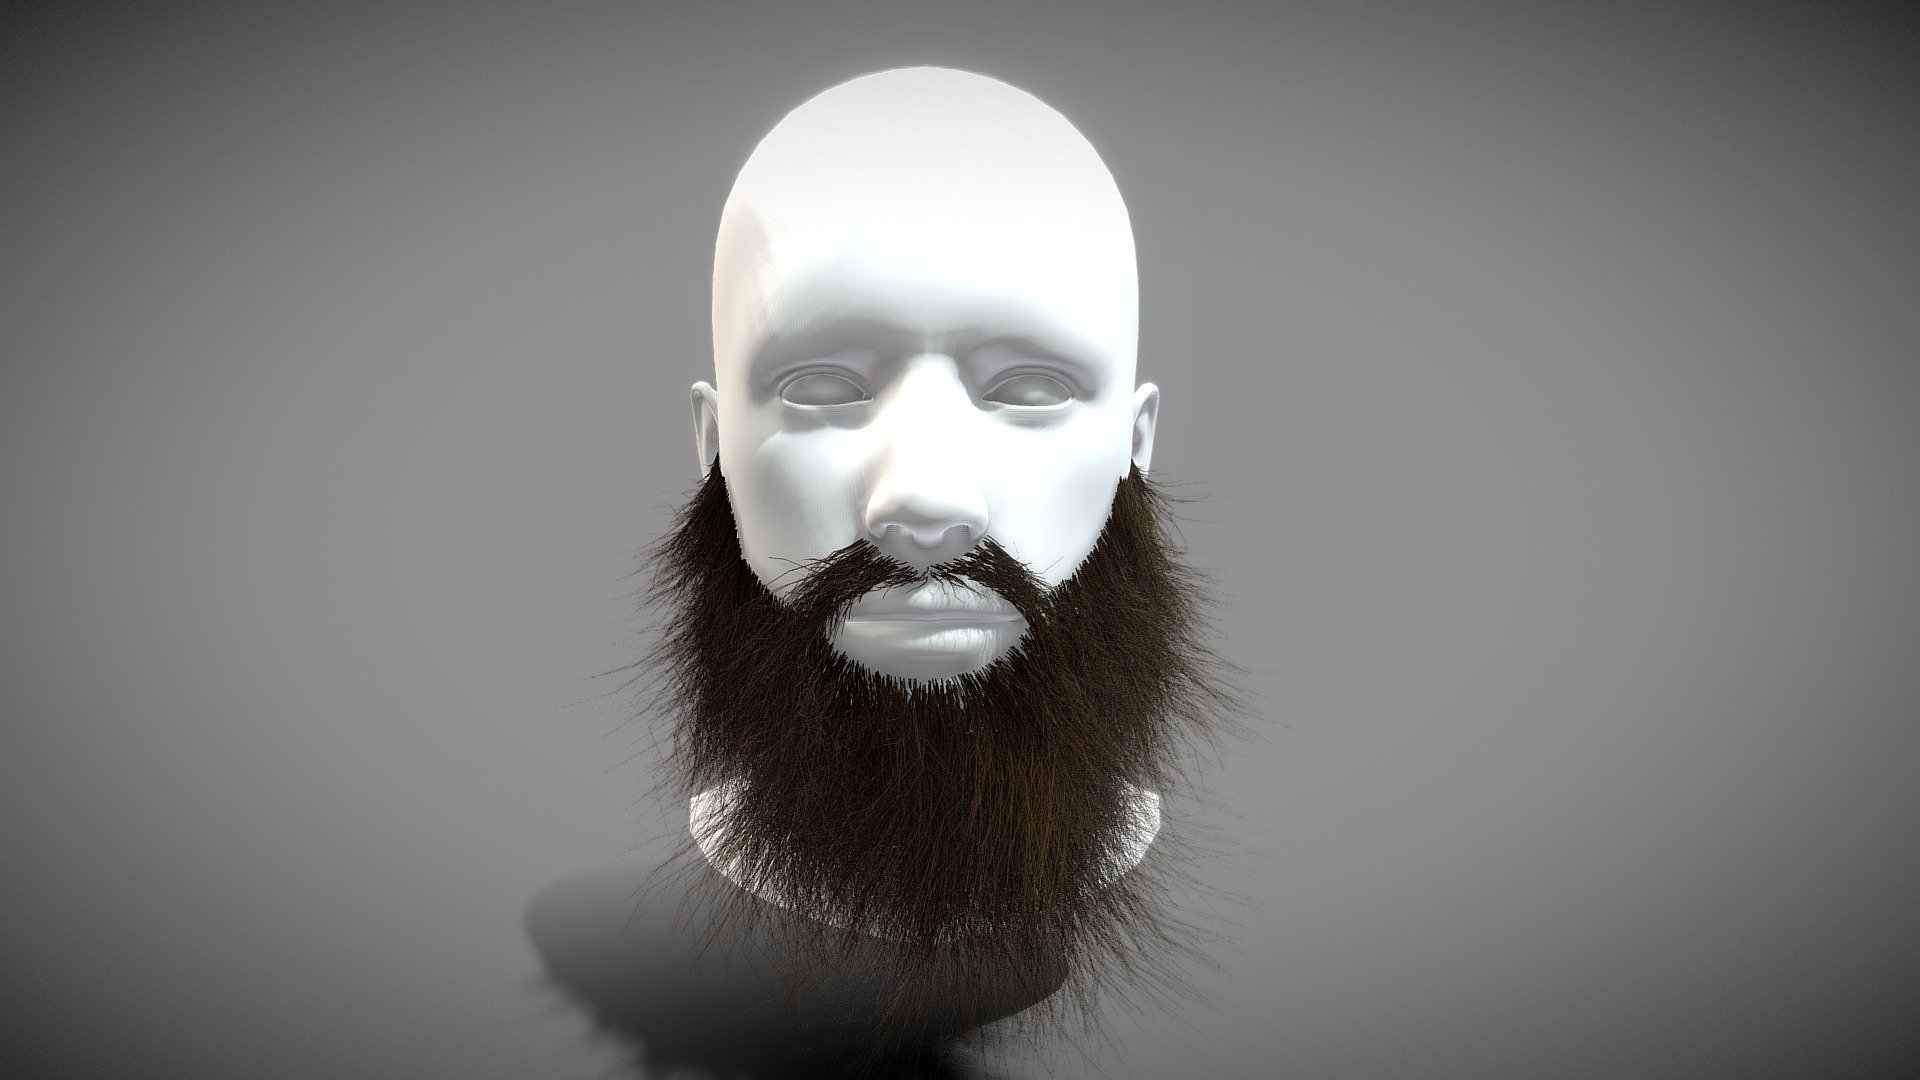 Fiber Mesh

Vertex colored

Separated Objects: Beard / Head / Eyes

by Lucid Dreams visuals

www.luciddreamsvisuals.com.ar - Big Long Beard - Buy Royalty Free 3D model by Lucid Dreams (@lucid_dreams_visuals) 3d model